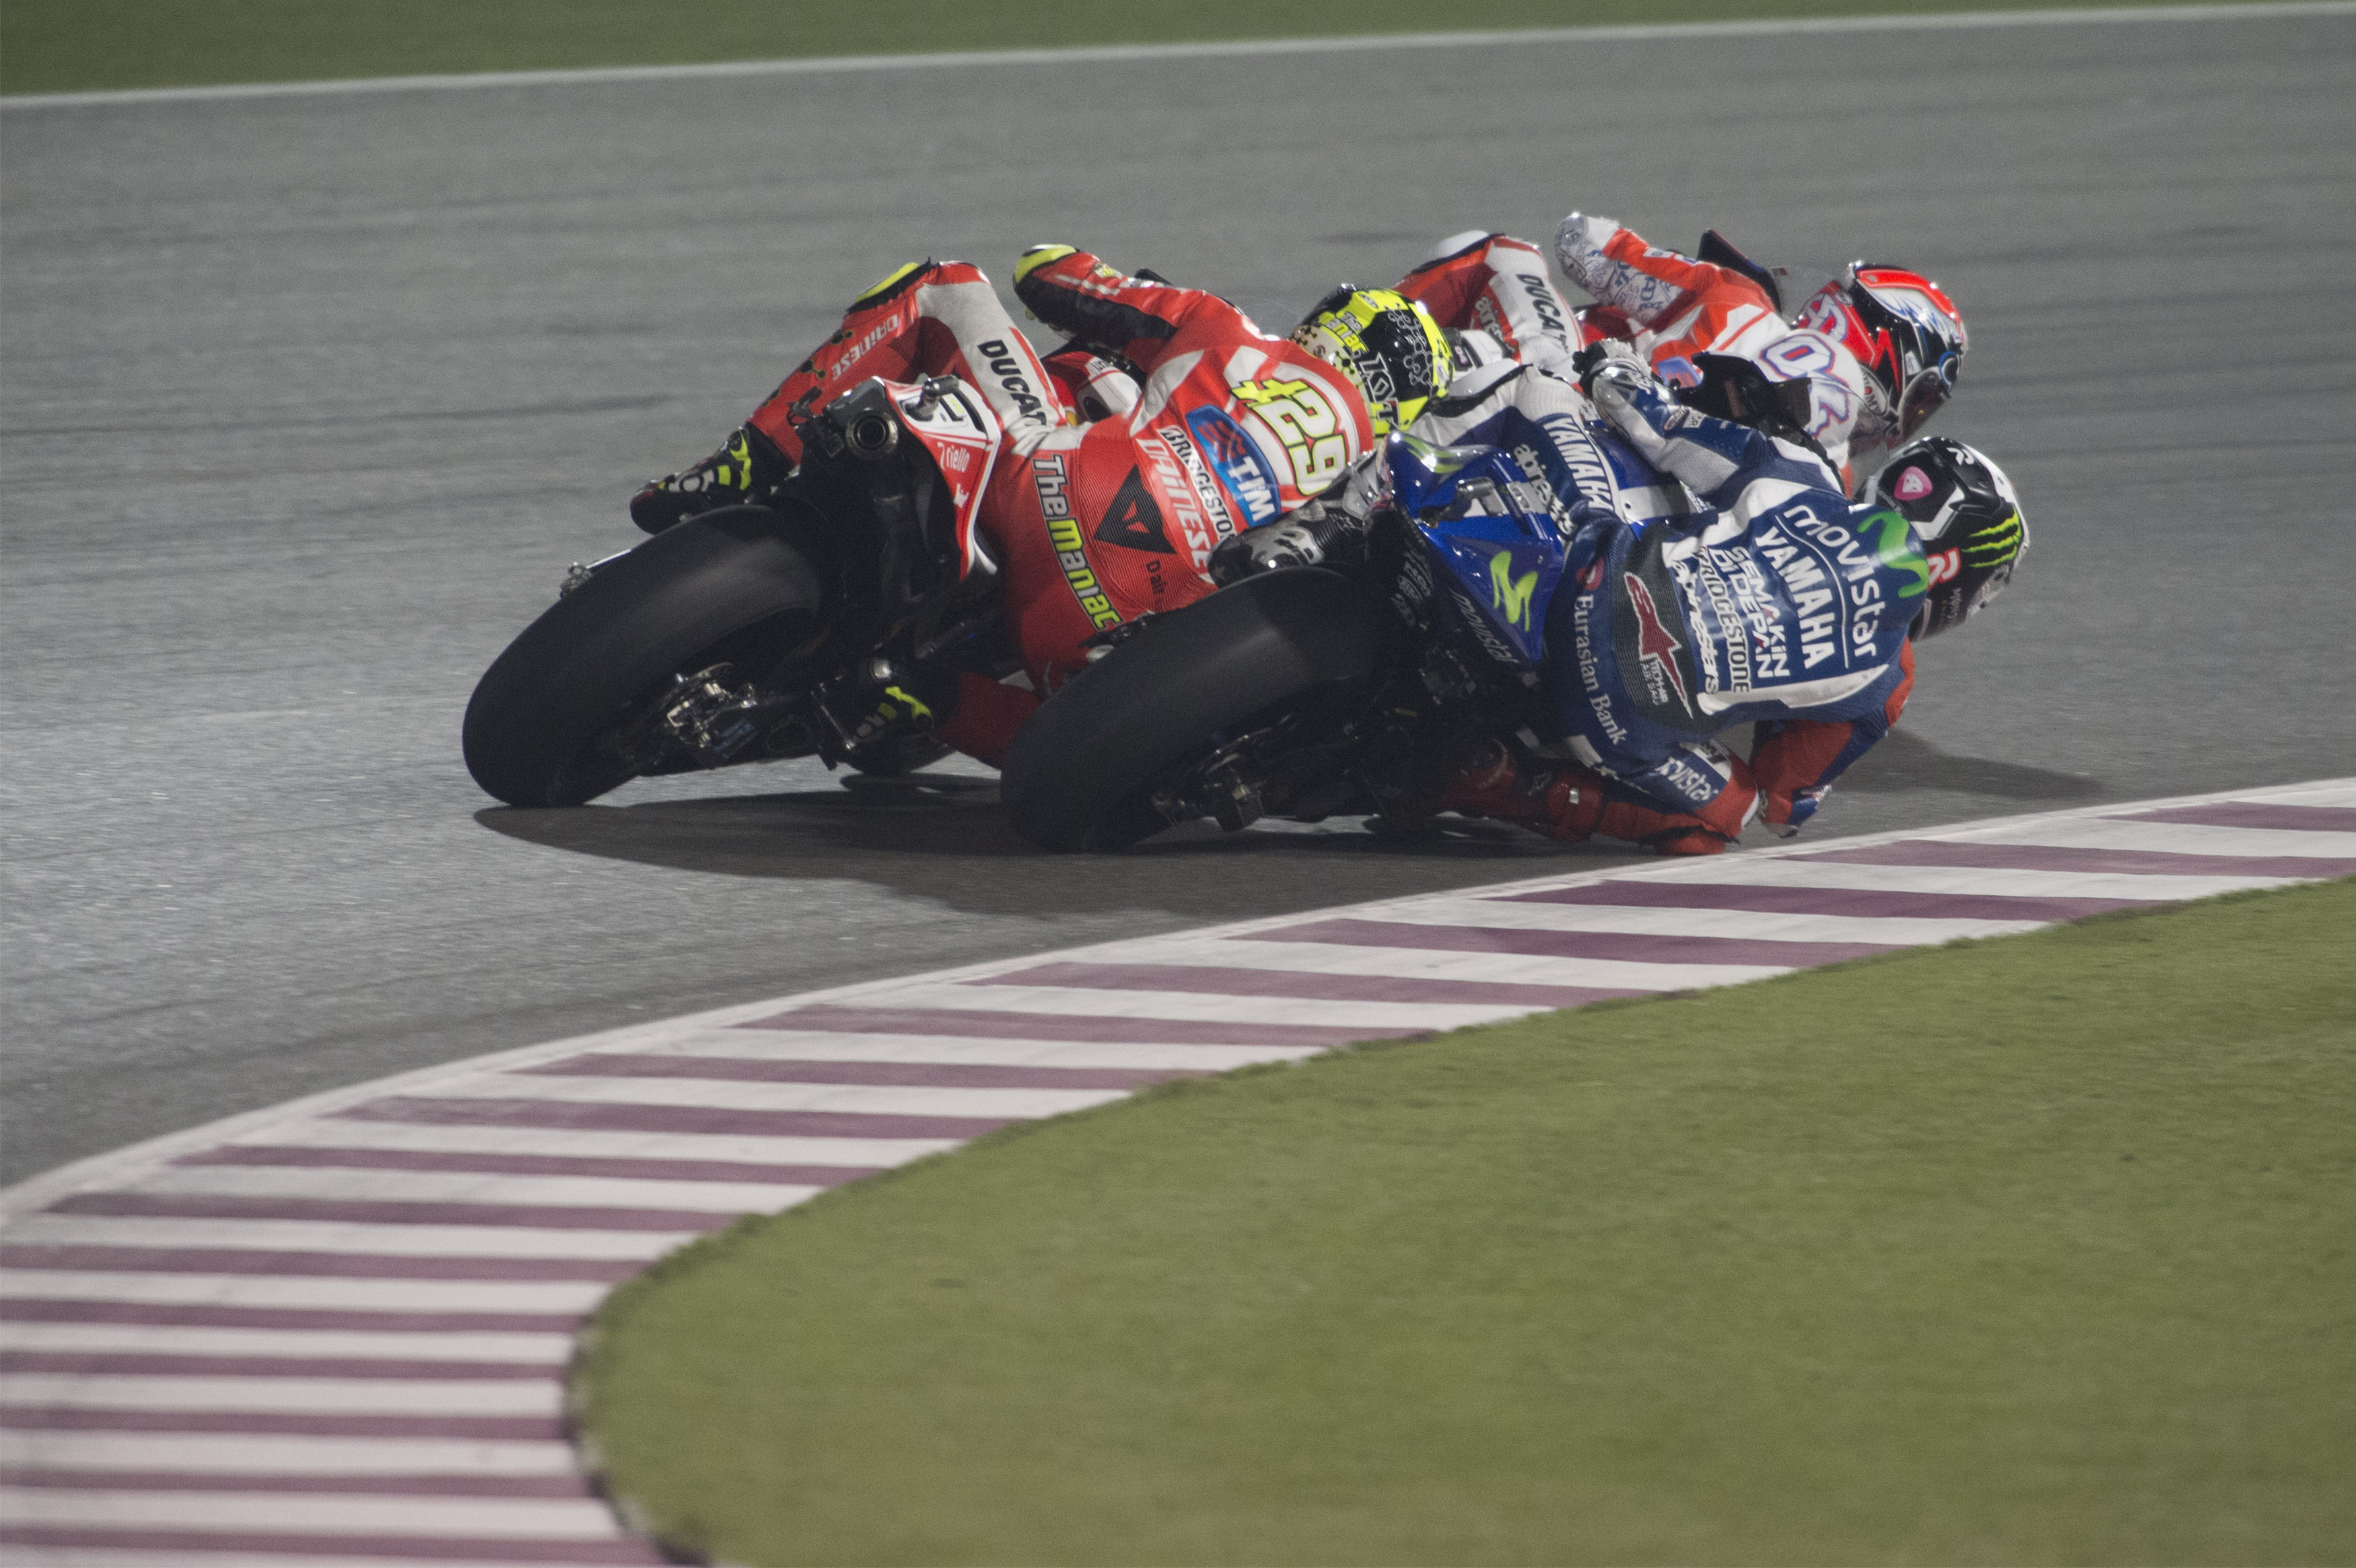 MotoGP 2015: Qatar race results